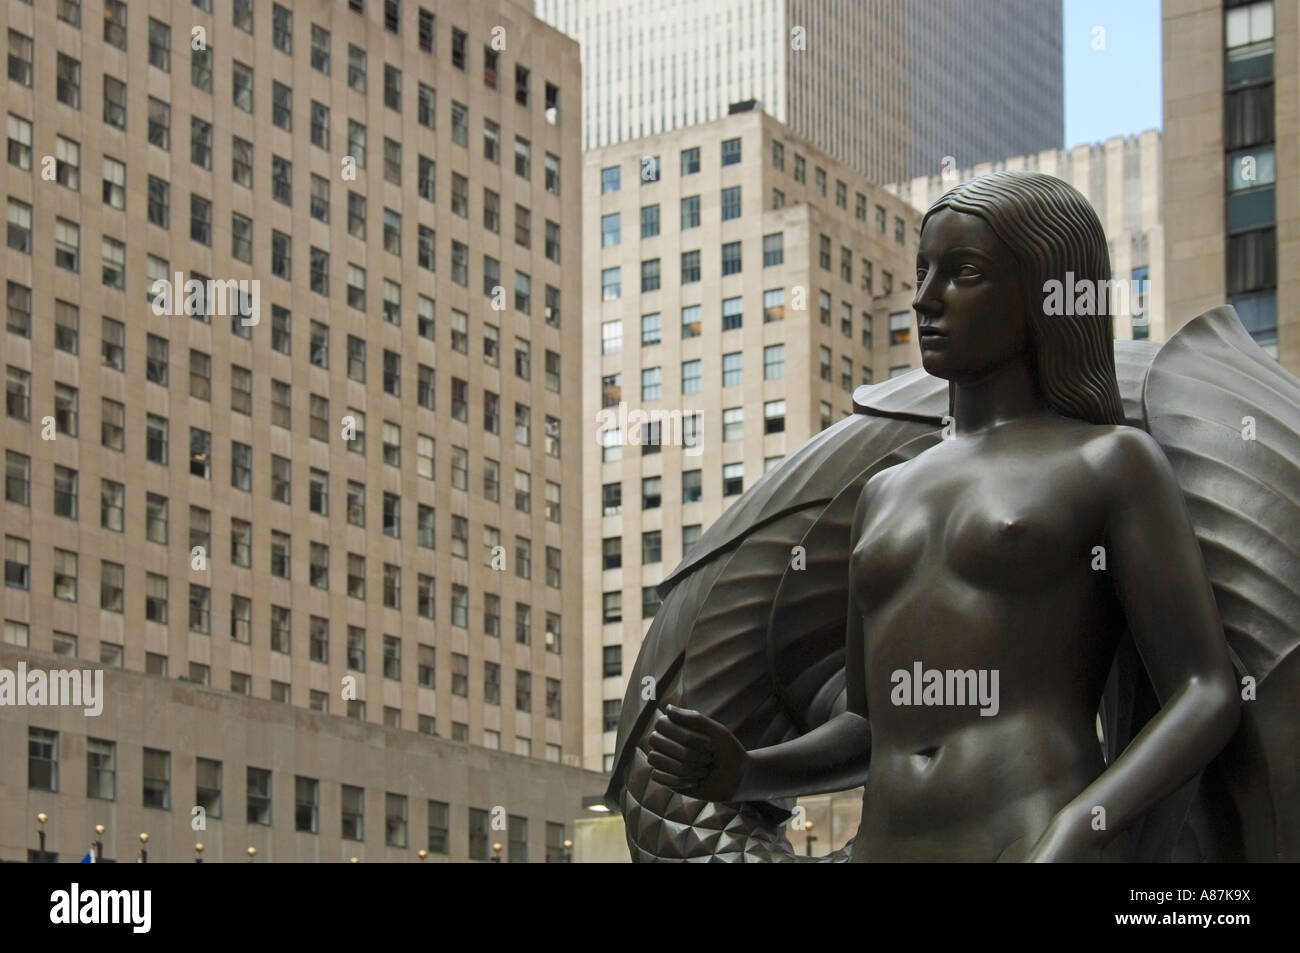 Sculpture of young girl in Rockefeller center New York city USA Stock Photo